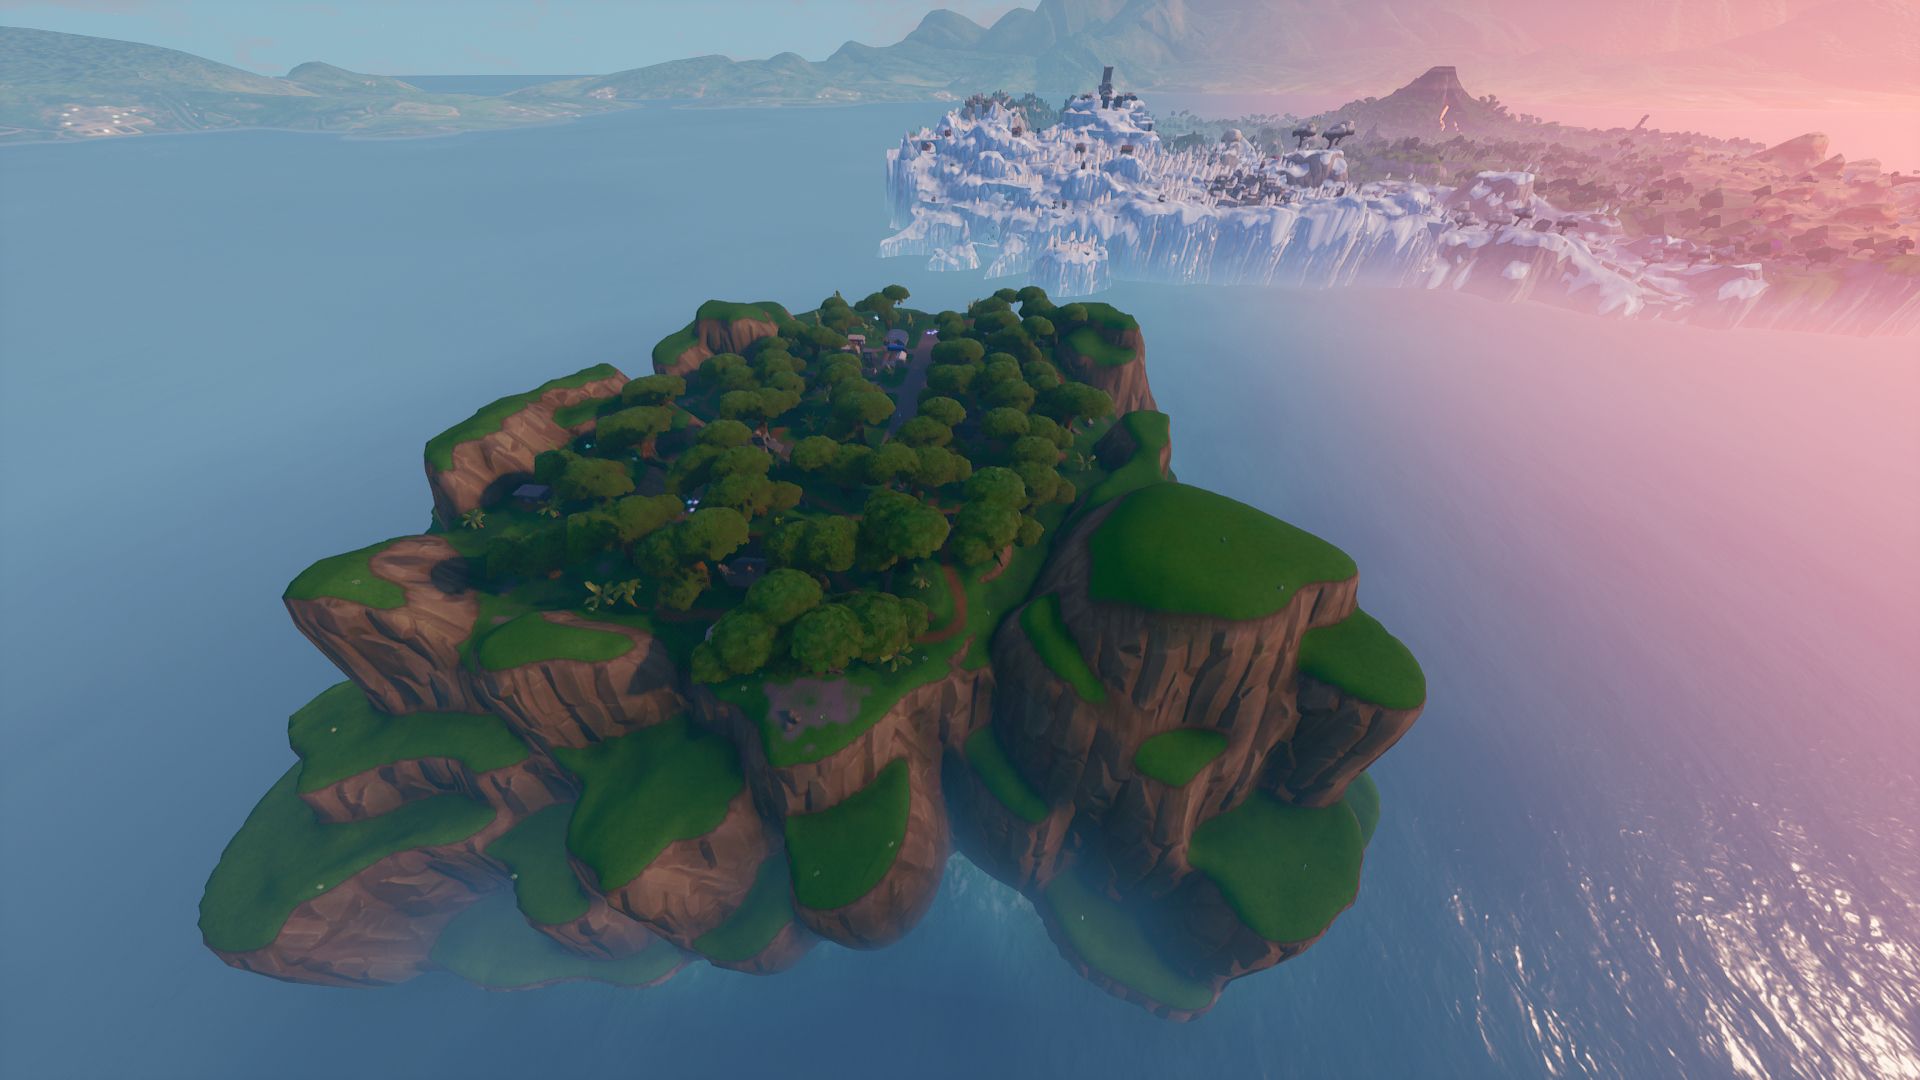 Jungle-themed spawn island in Fortnite Season 8